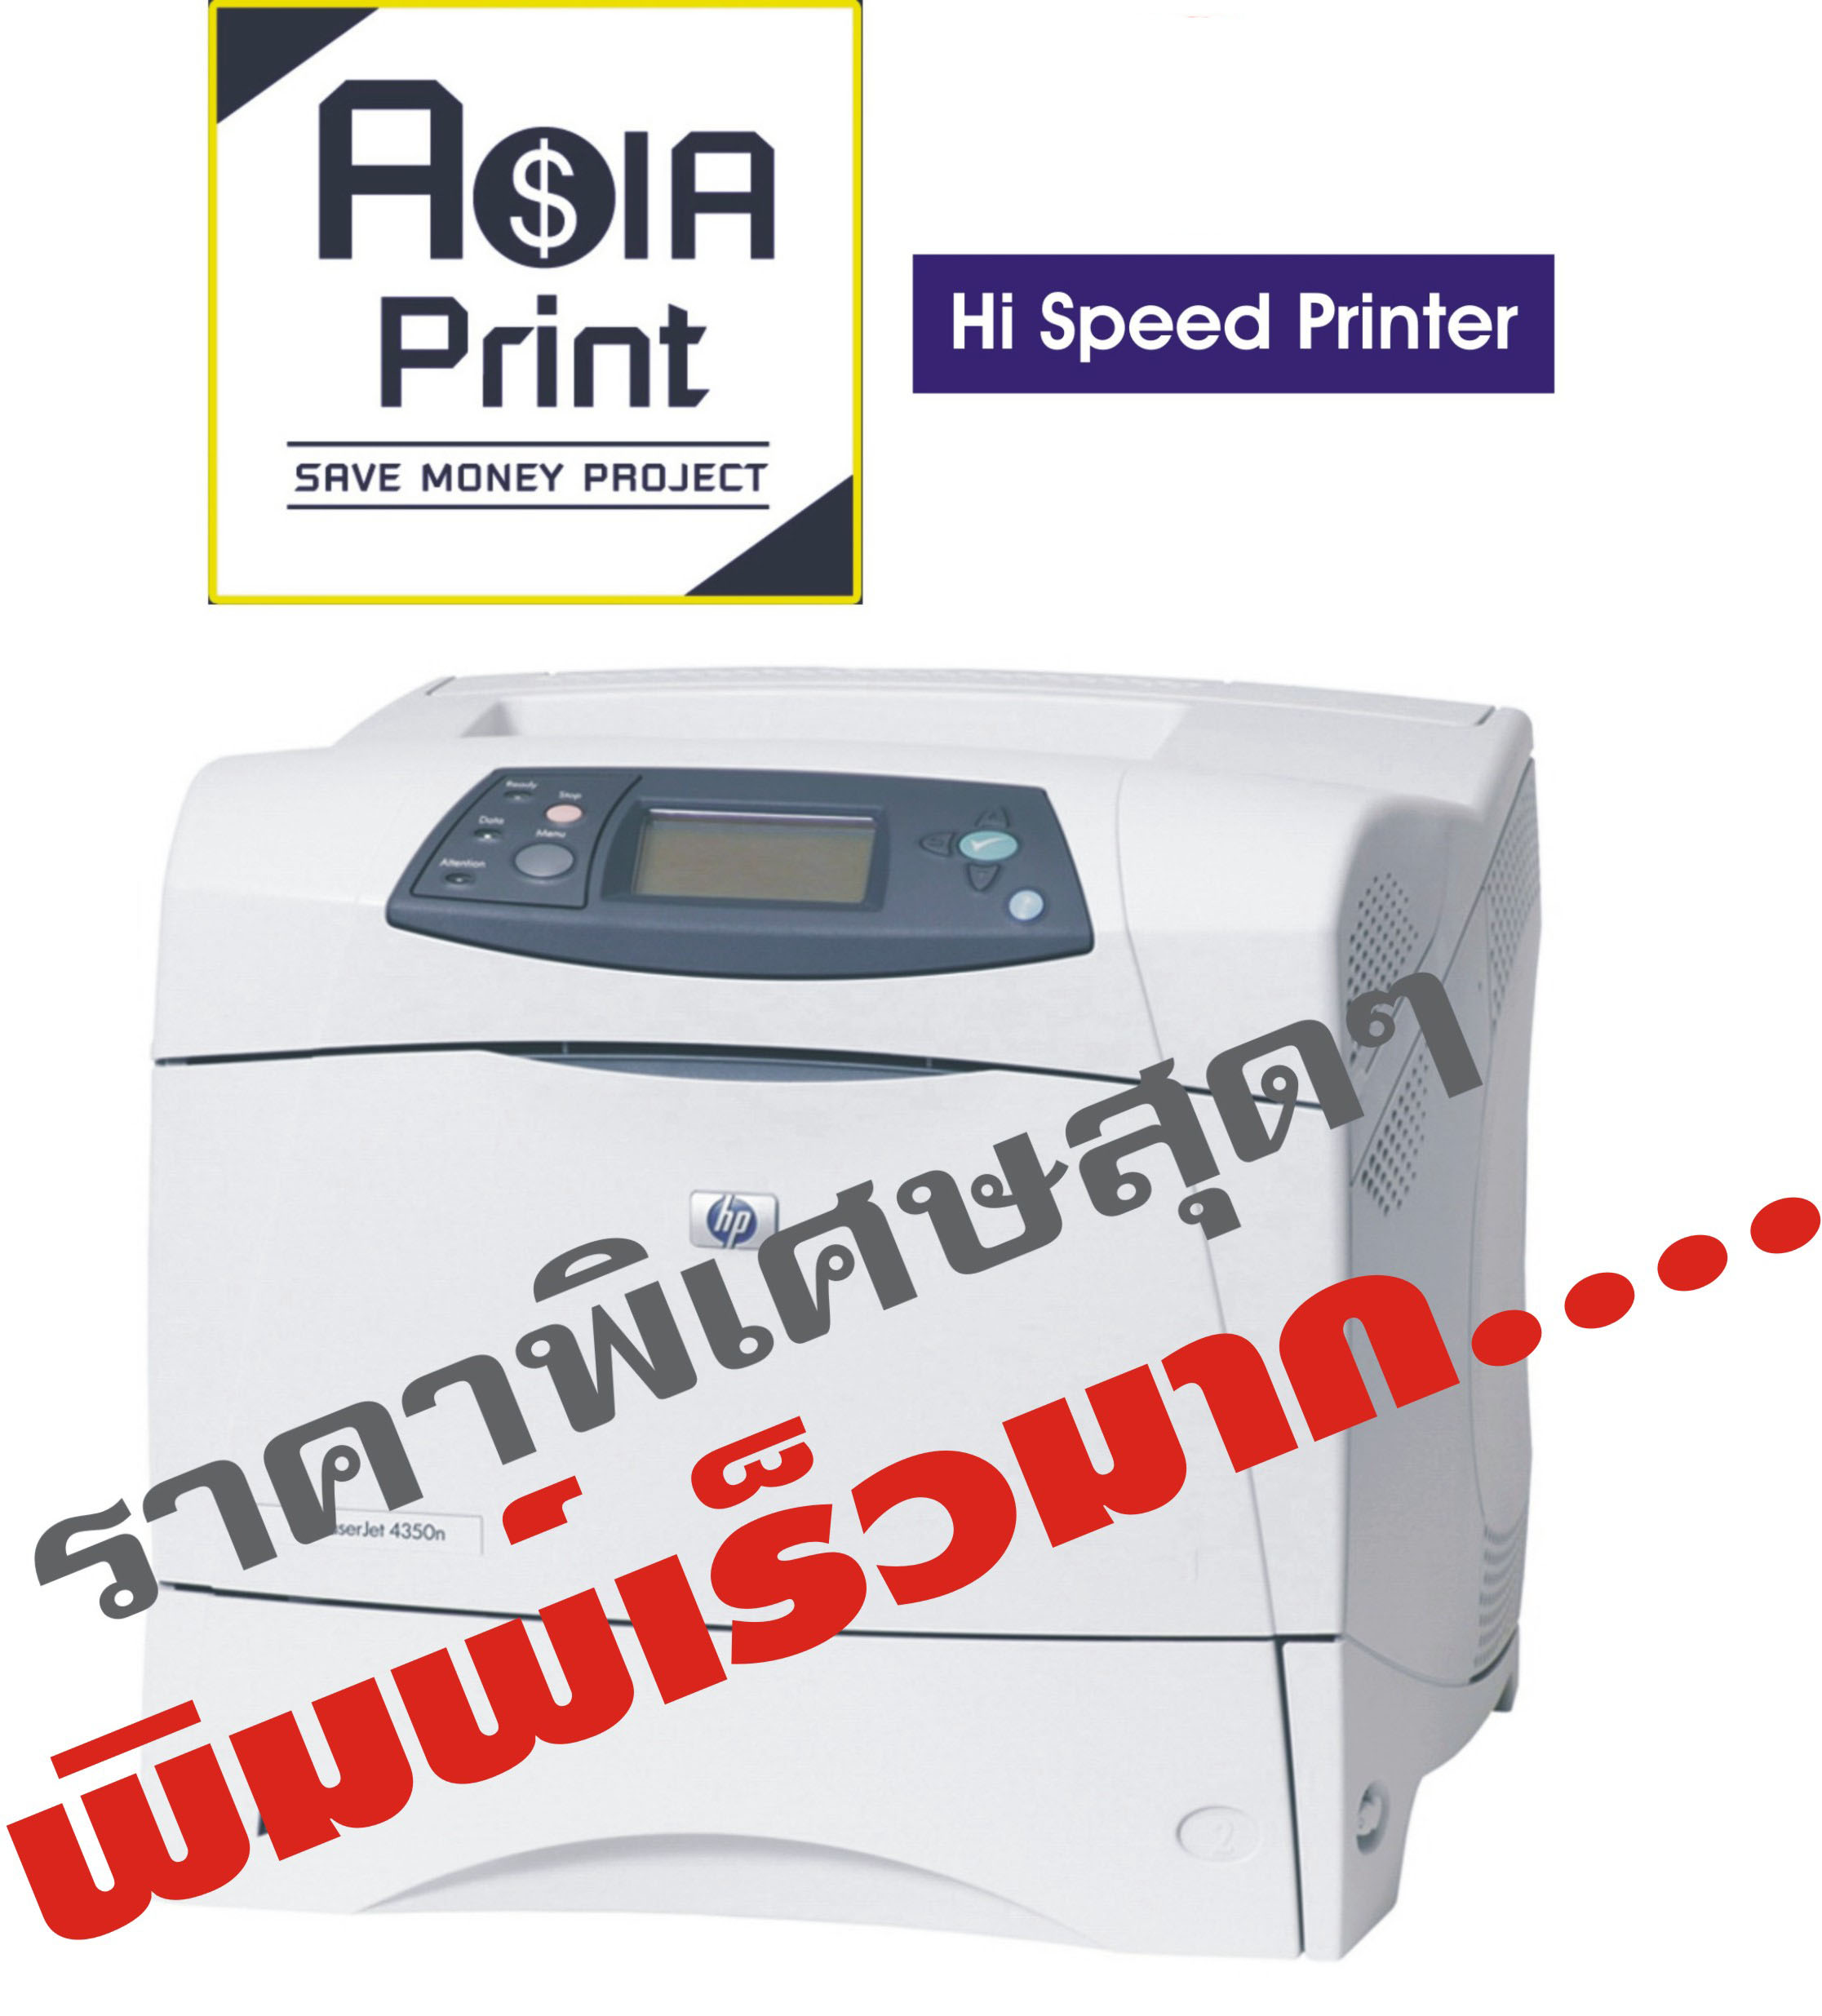 Asiaprint Save Money Project ขอเสนอ Hp Laserjet 4250n เครื่องพิมพ์ ความเร็วสูง 45 แผ่น/นาที ยอดนิยมราคาถูกที่สุด 2,500 บาทเท่านั้น หมึกถูกมาก (ตามแบบฉบับ ASIA PRINT) รูปที่ 1